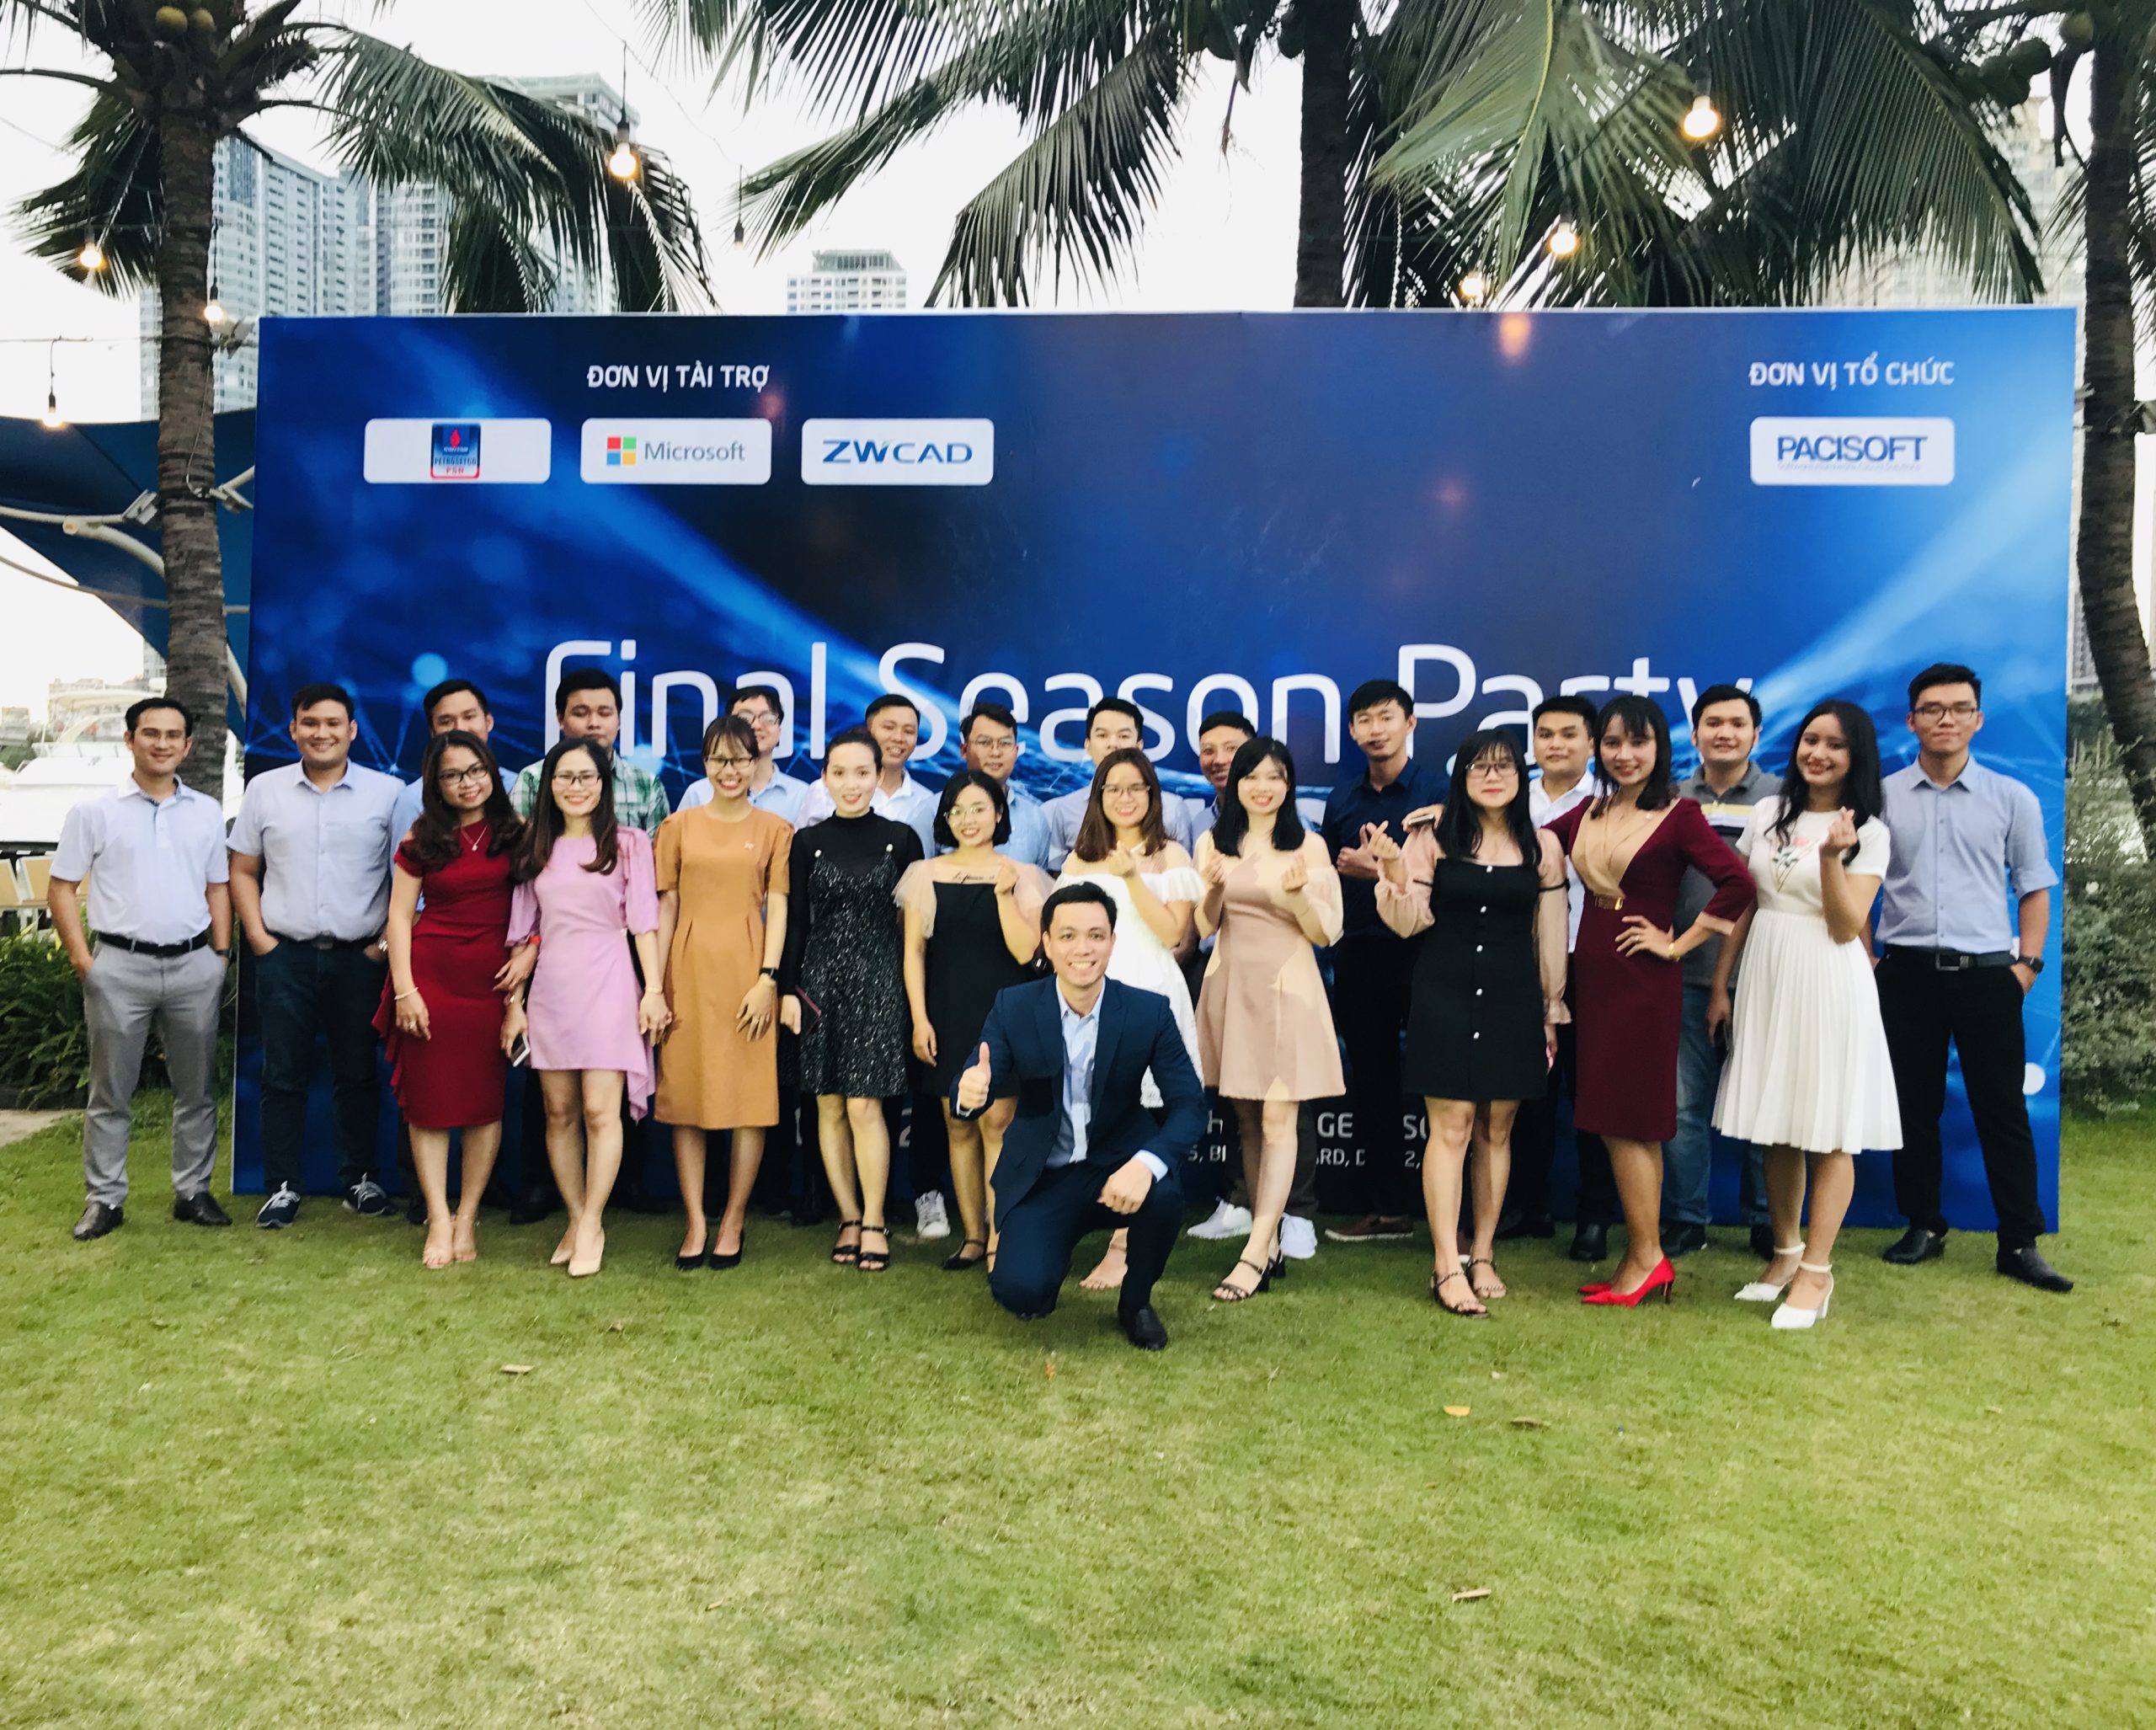 Final Seasons Party 2019